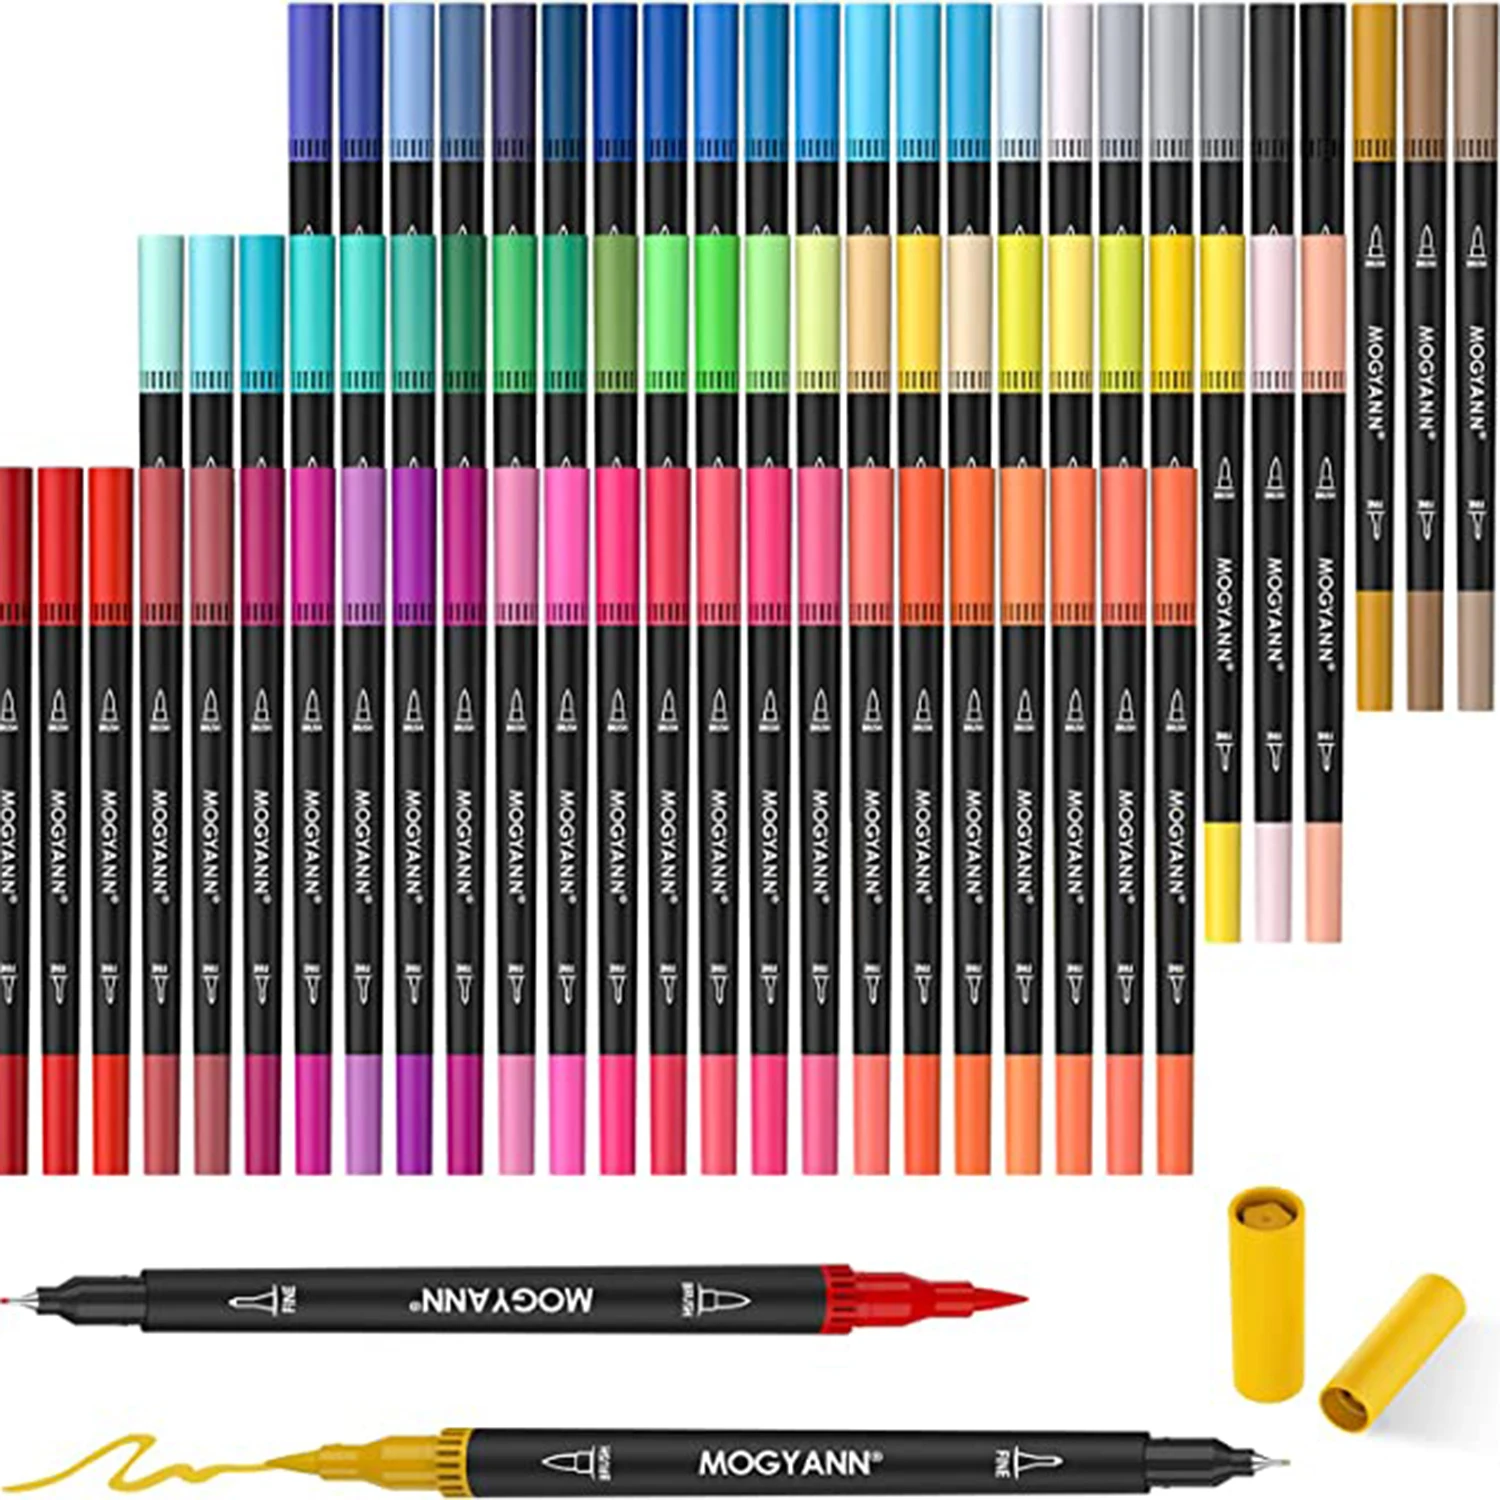 Dual Brush Marker Pens for Coloring Books, Fine Tip, Pen Set for